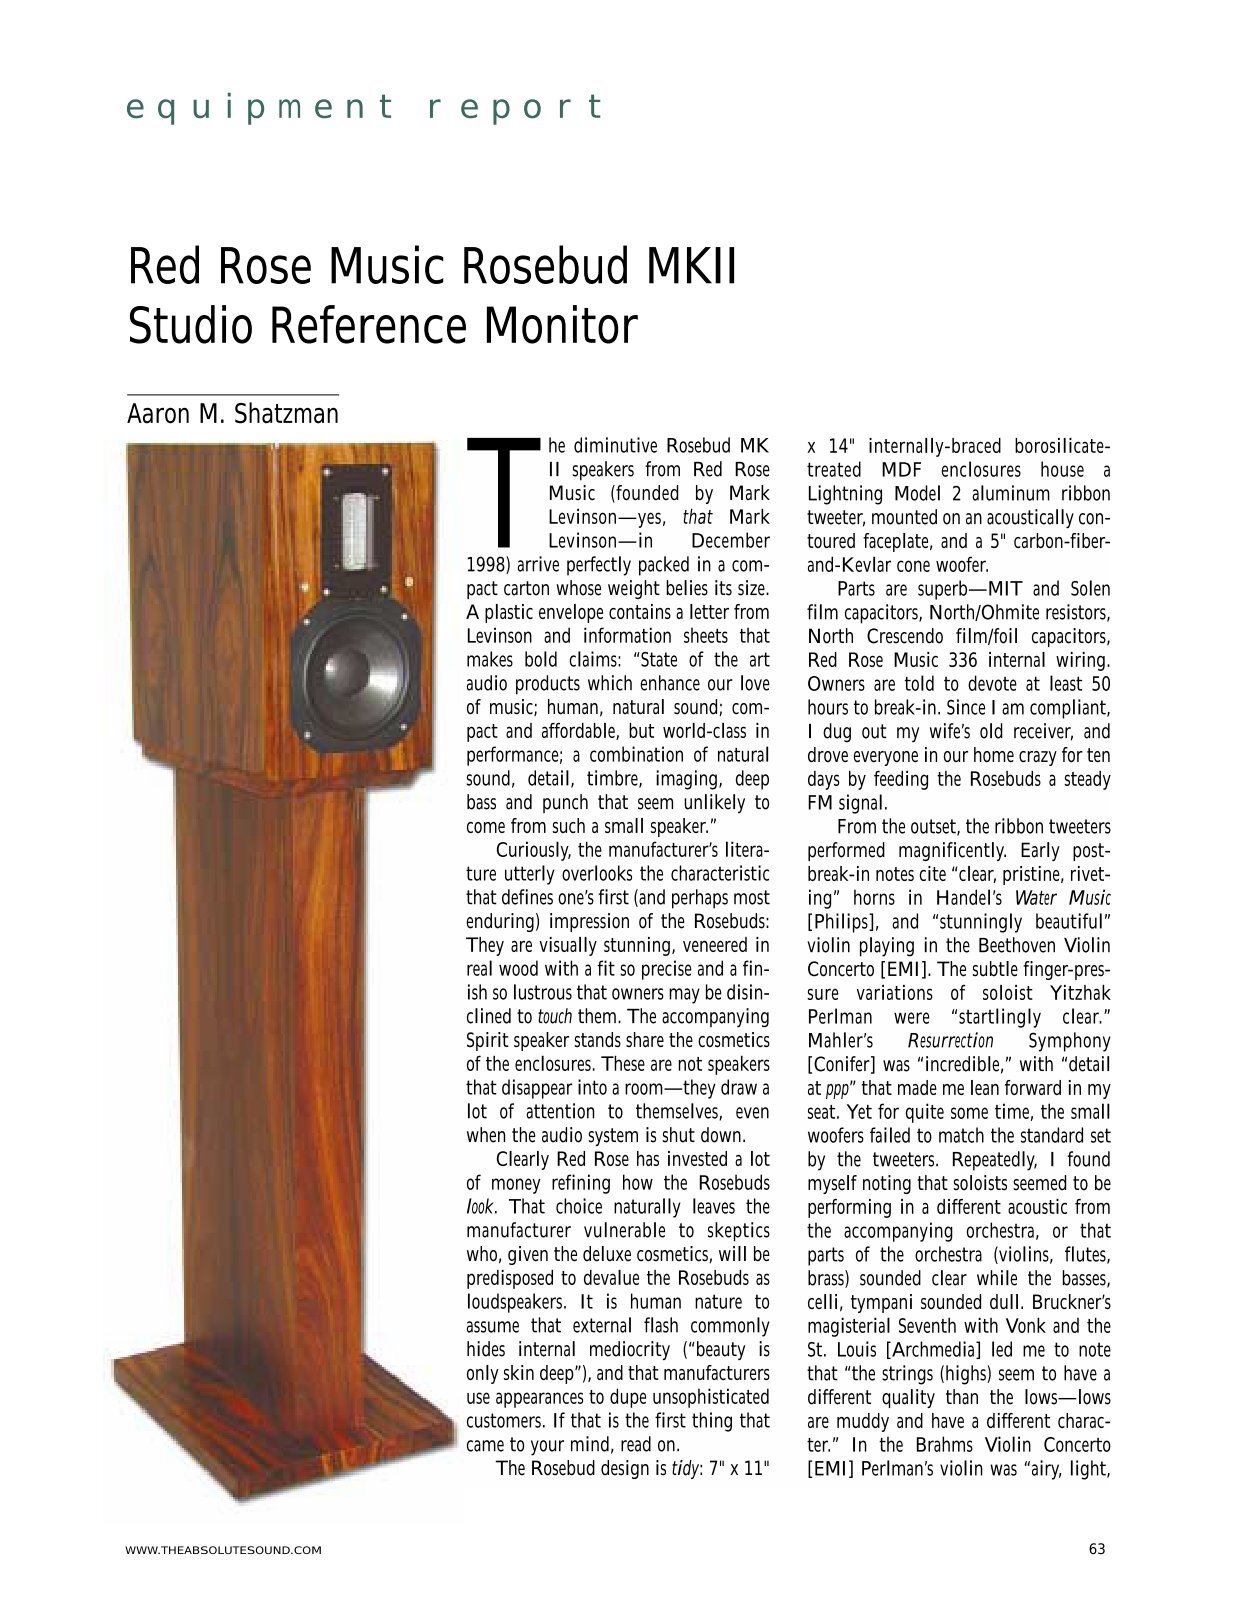 red-rose-music-rosebud-mkii-studio-reference-monitor.jpg